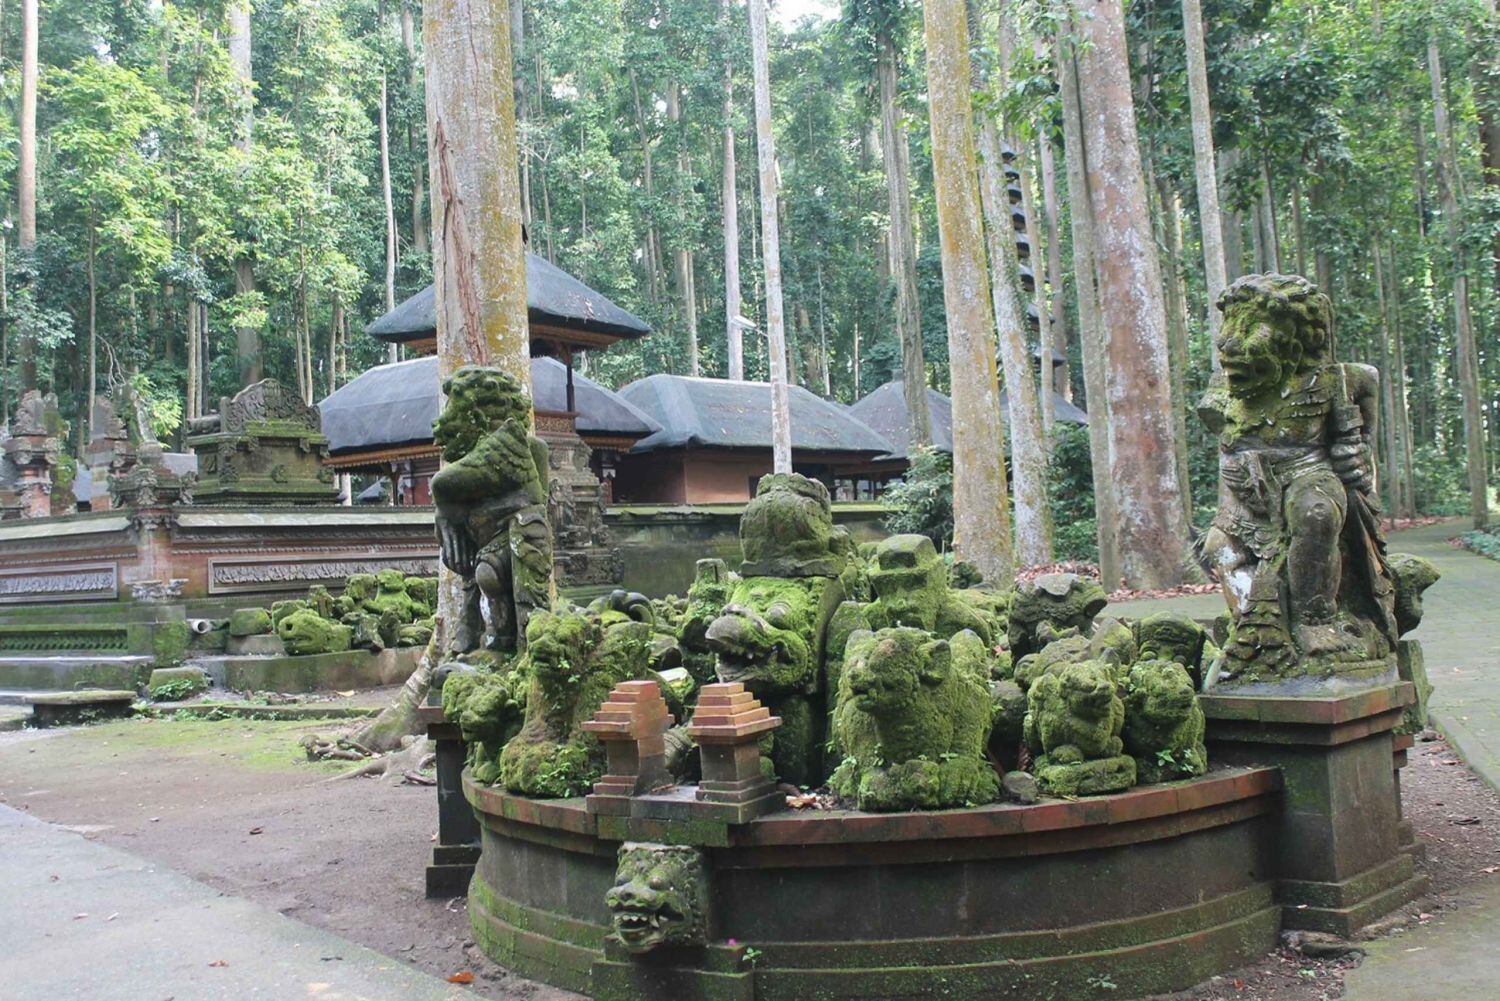 Bali: Mengwi Taman Ayun Site and Sangeh Monkey Forest Tour